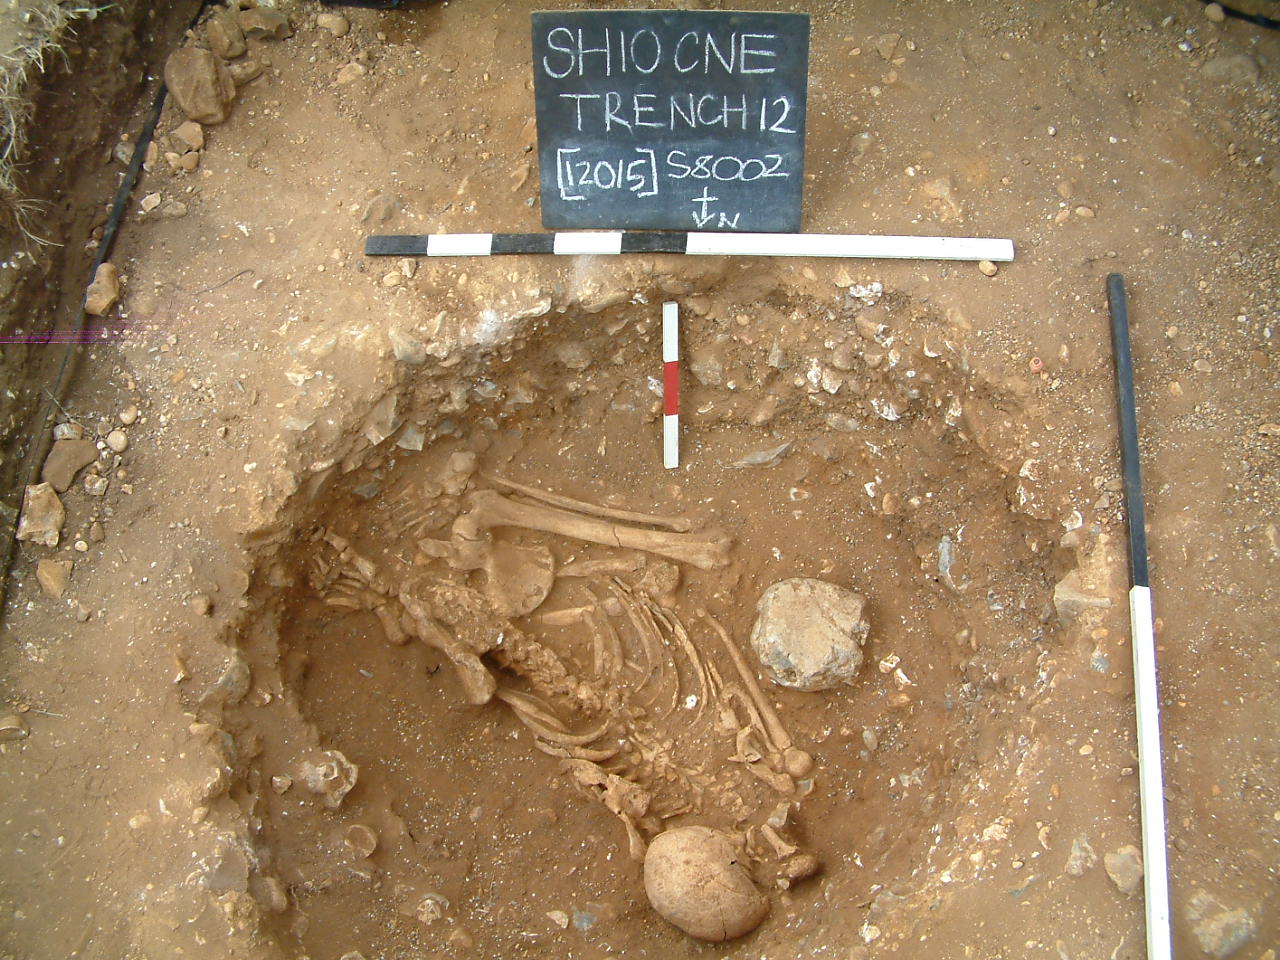 Sedgeford Iron Age Settlement